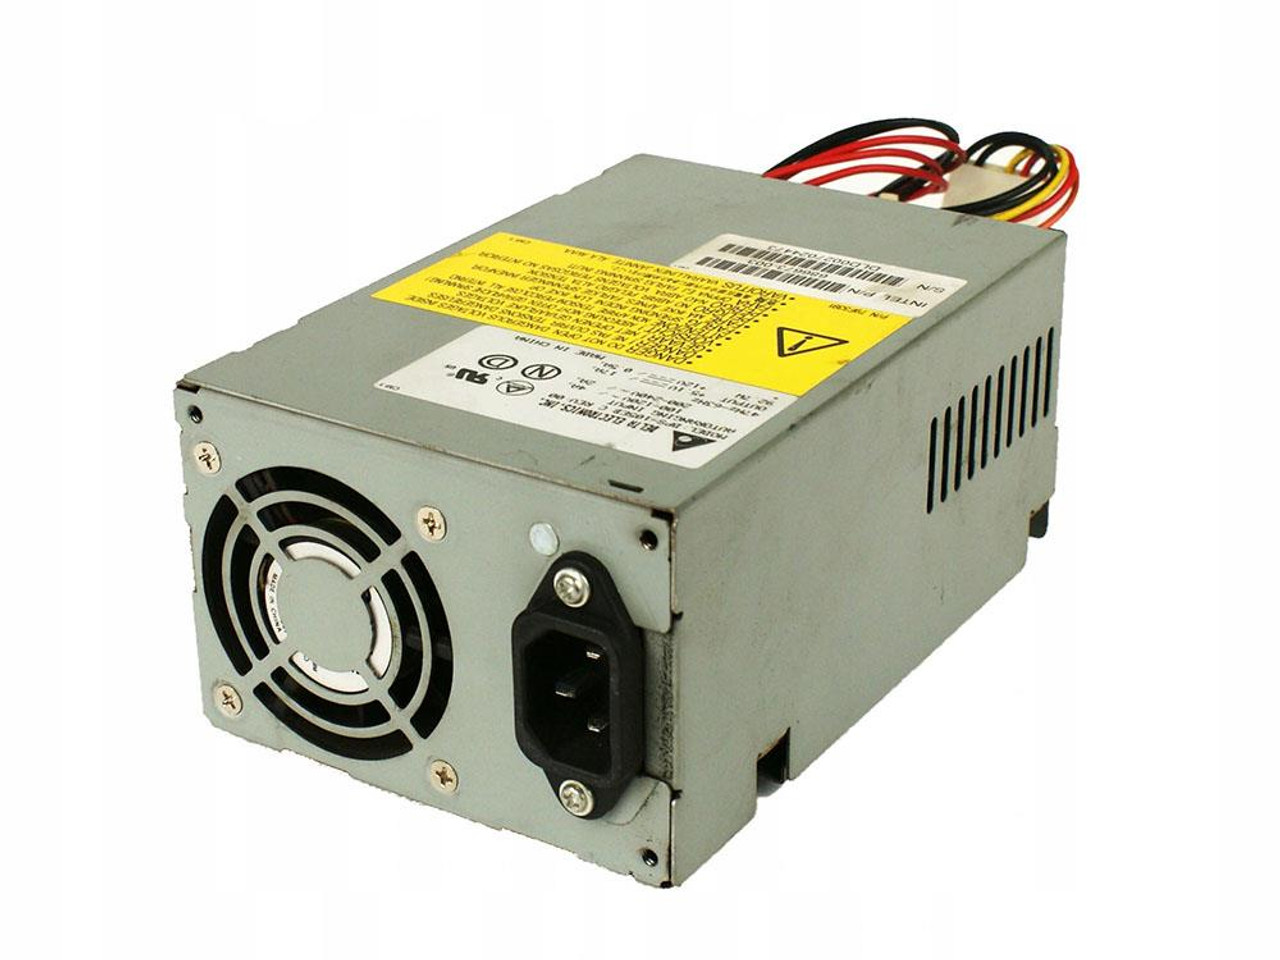 DPS-105EB Delta Electronics 105-Watts Power Supply